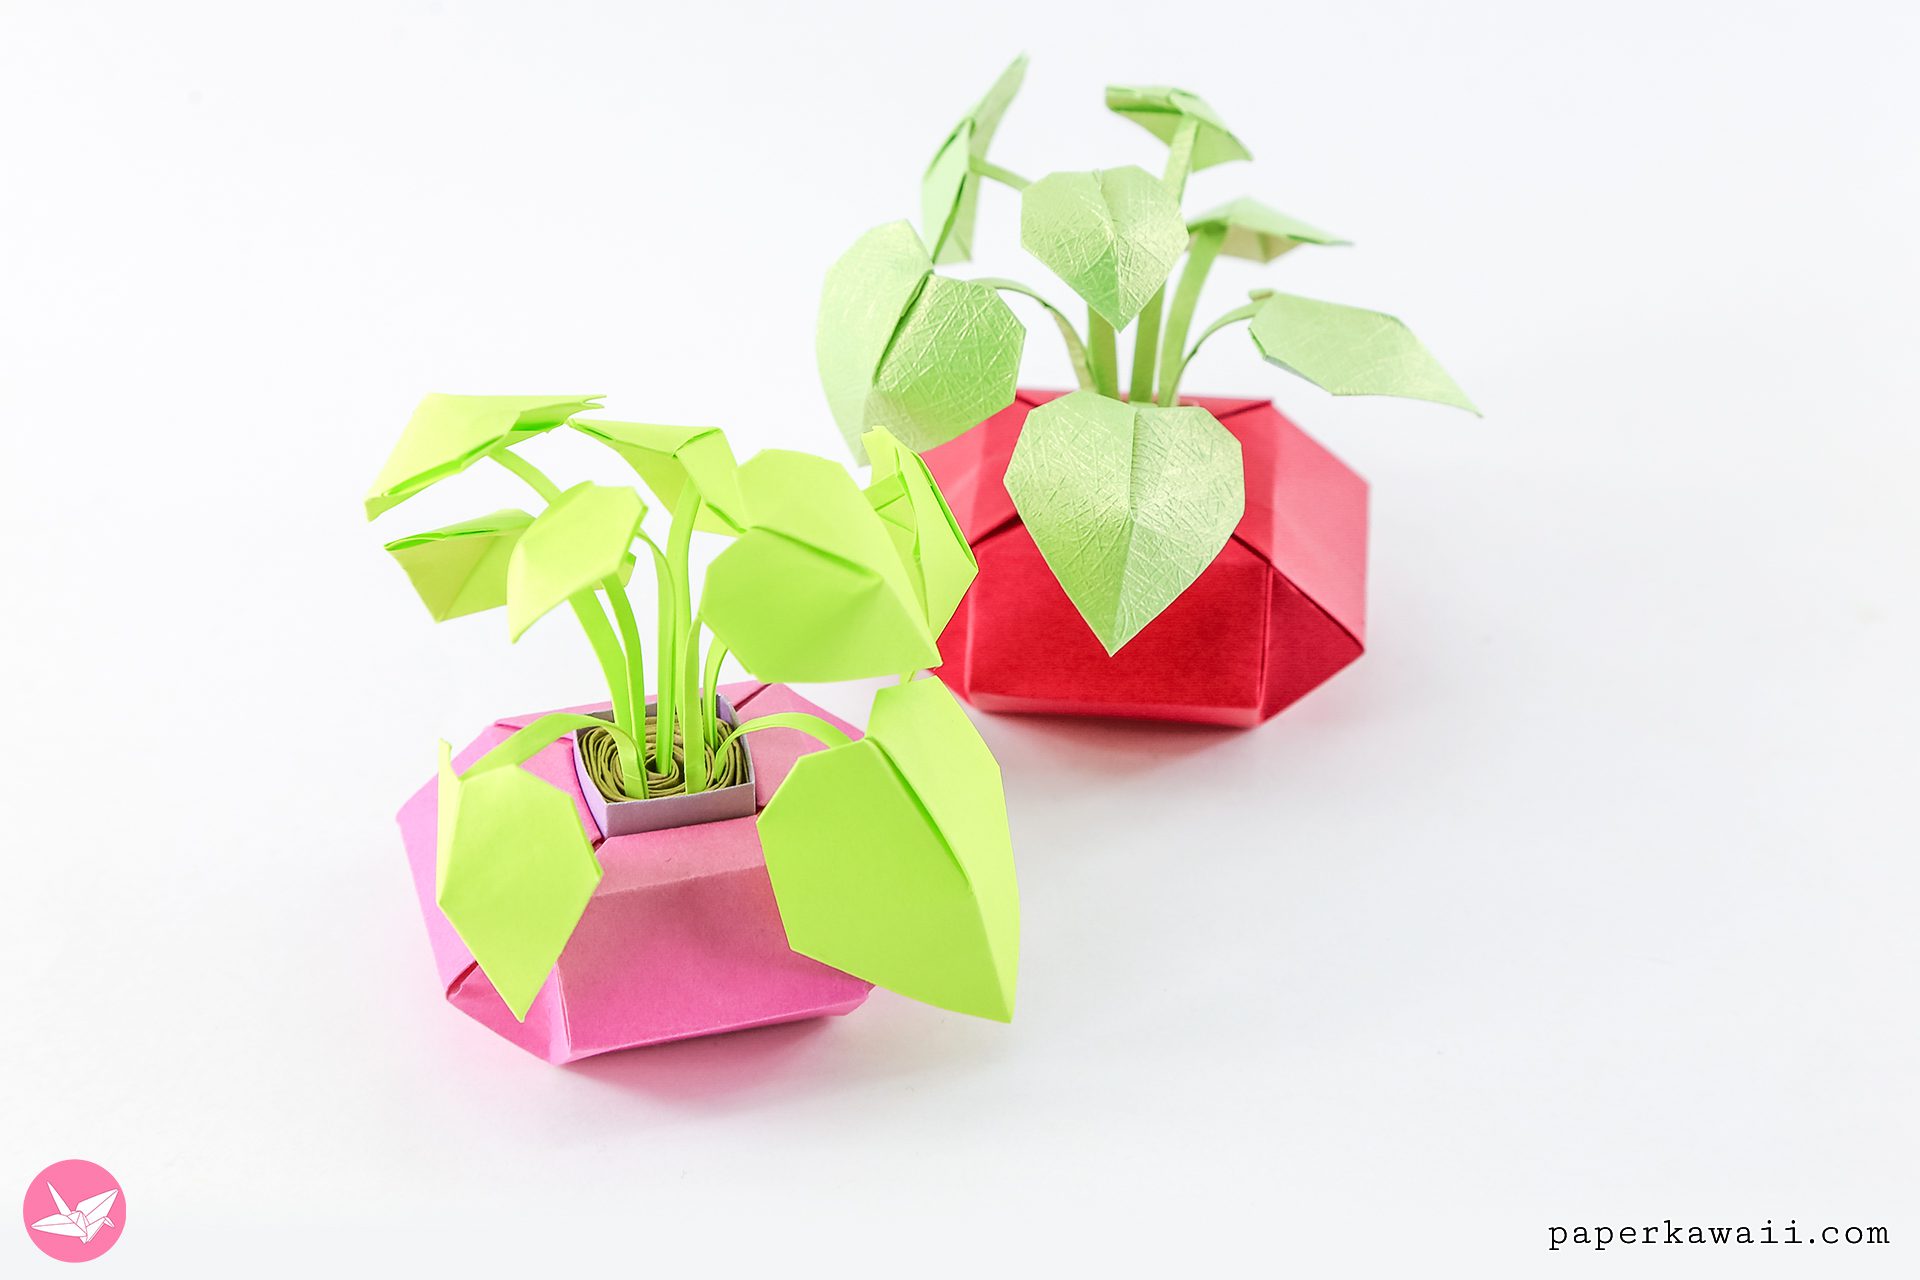 Mini Origami Pot Plants Tutorial - Make Cute Paper Houseplants